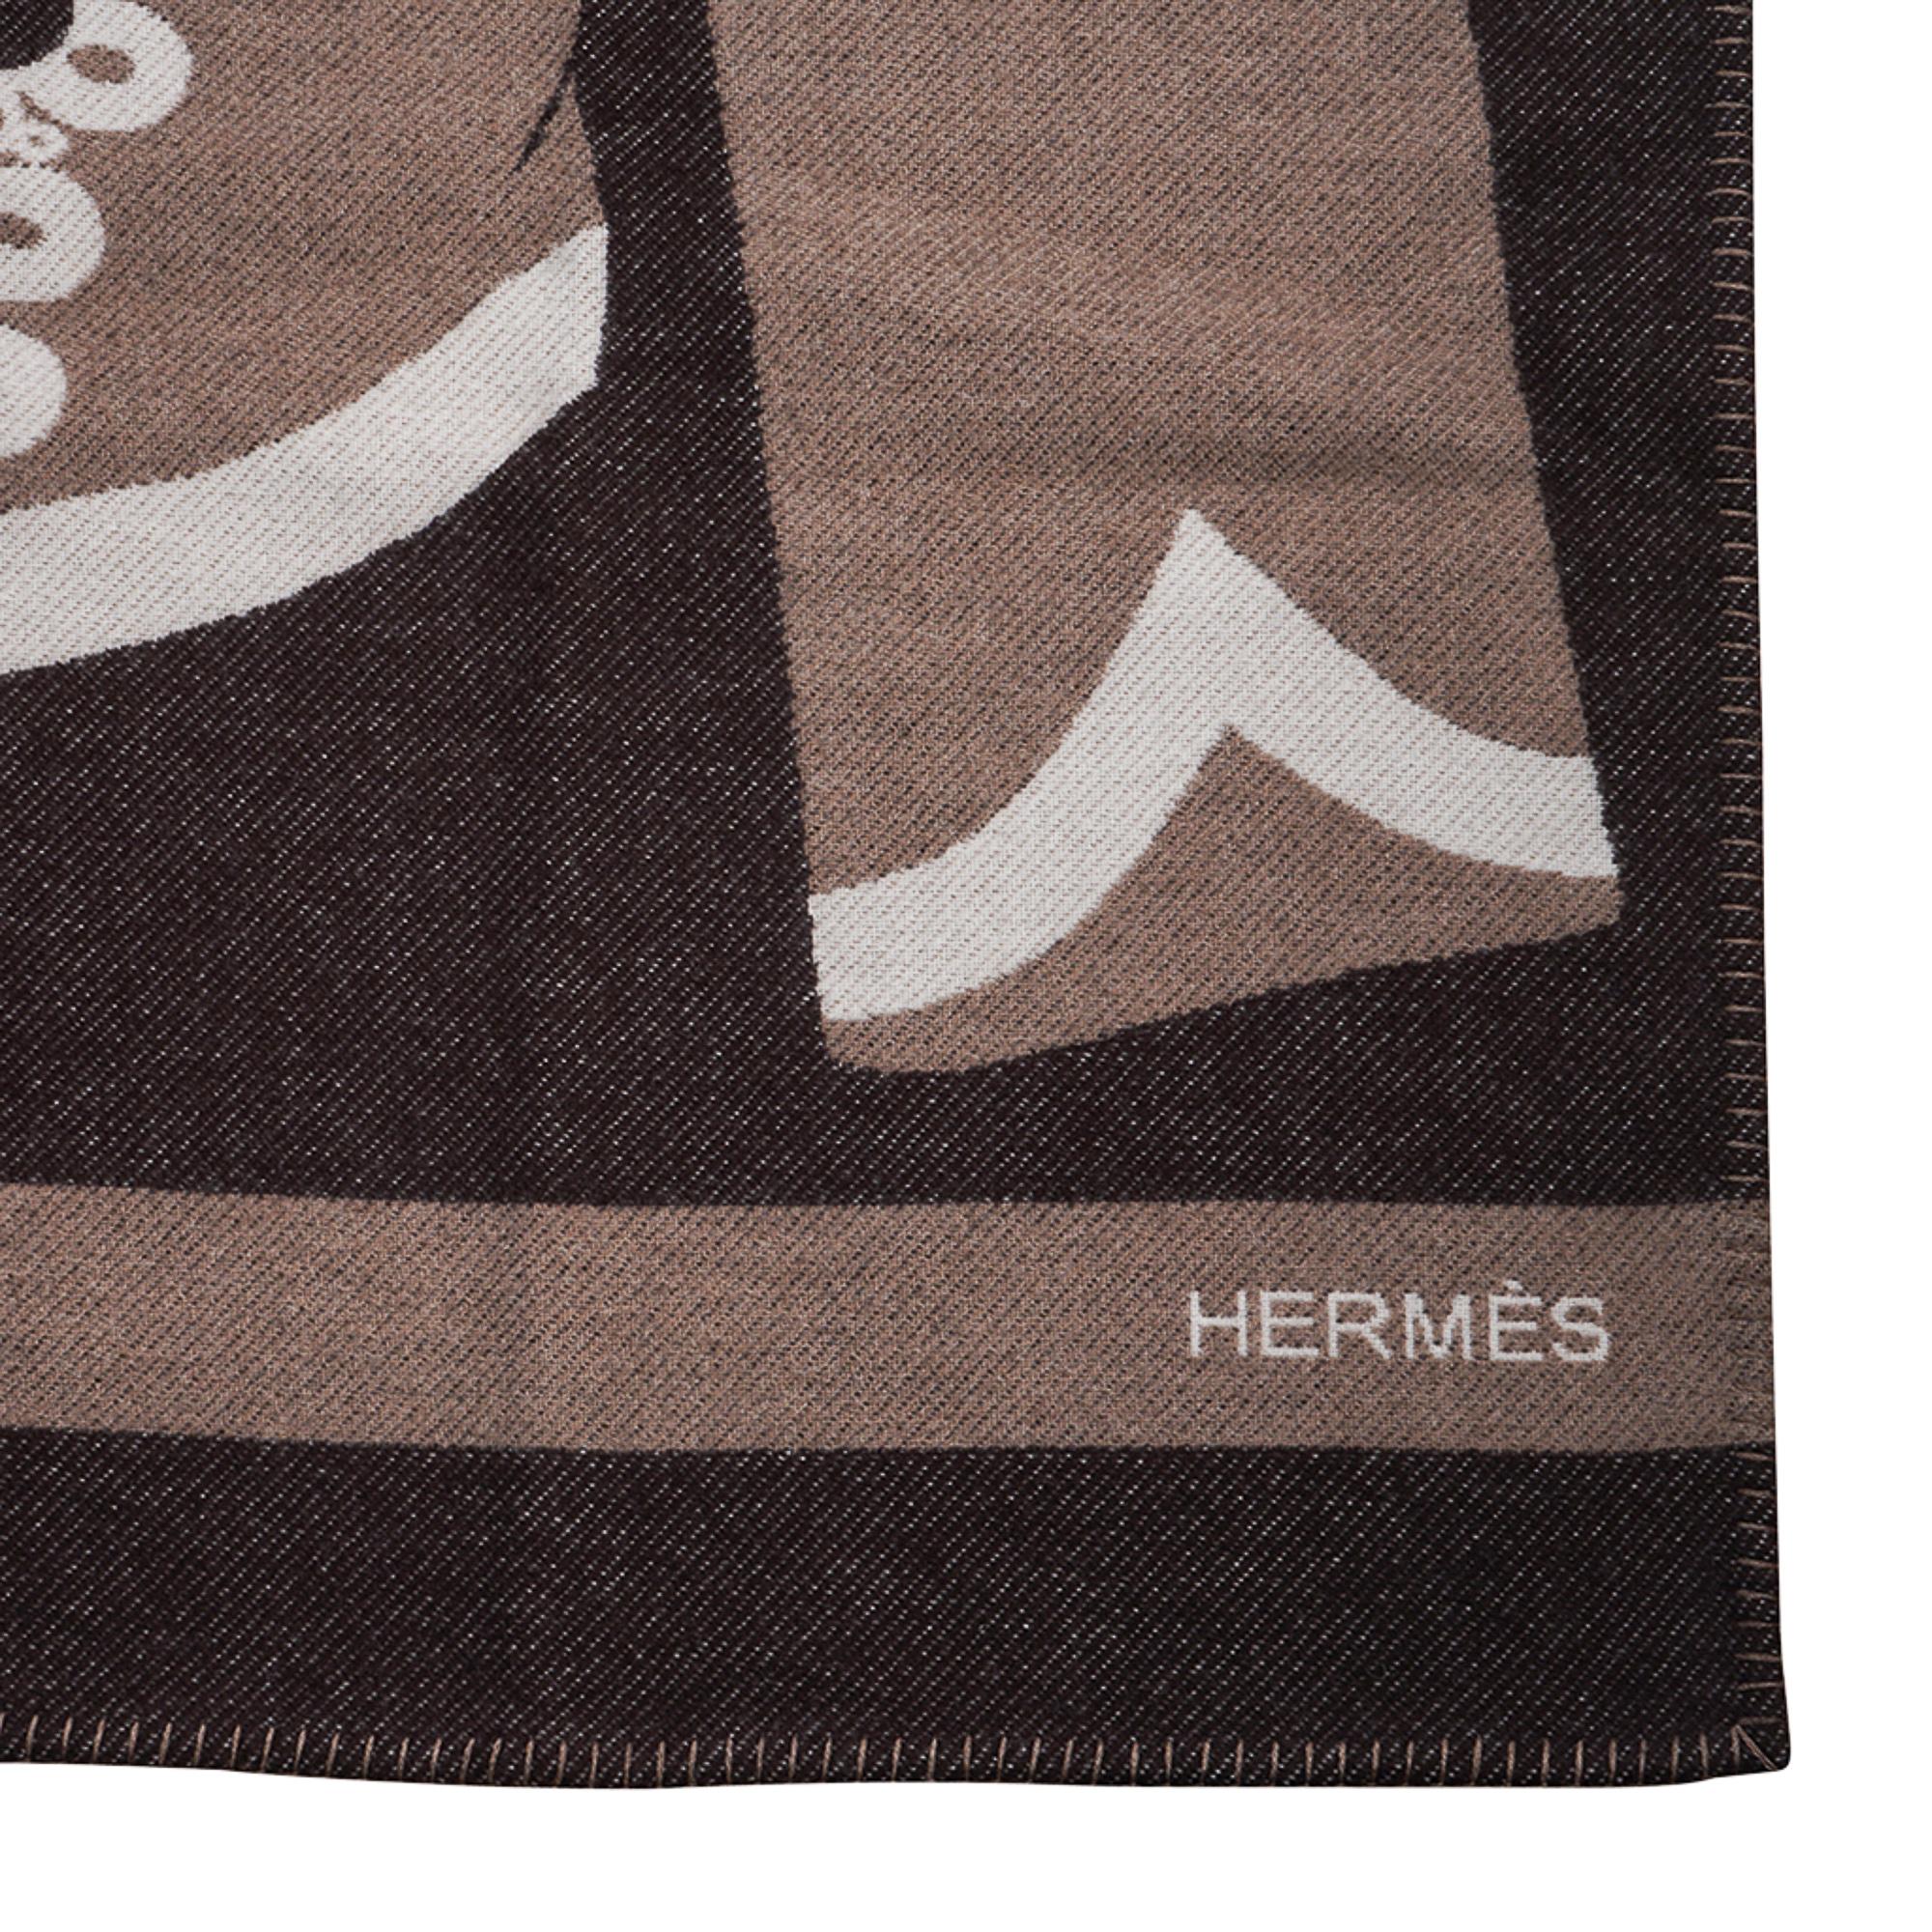 Hermes Brandebourgs Blanket Ecorce Throw For Sale 4